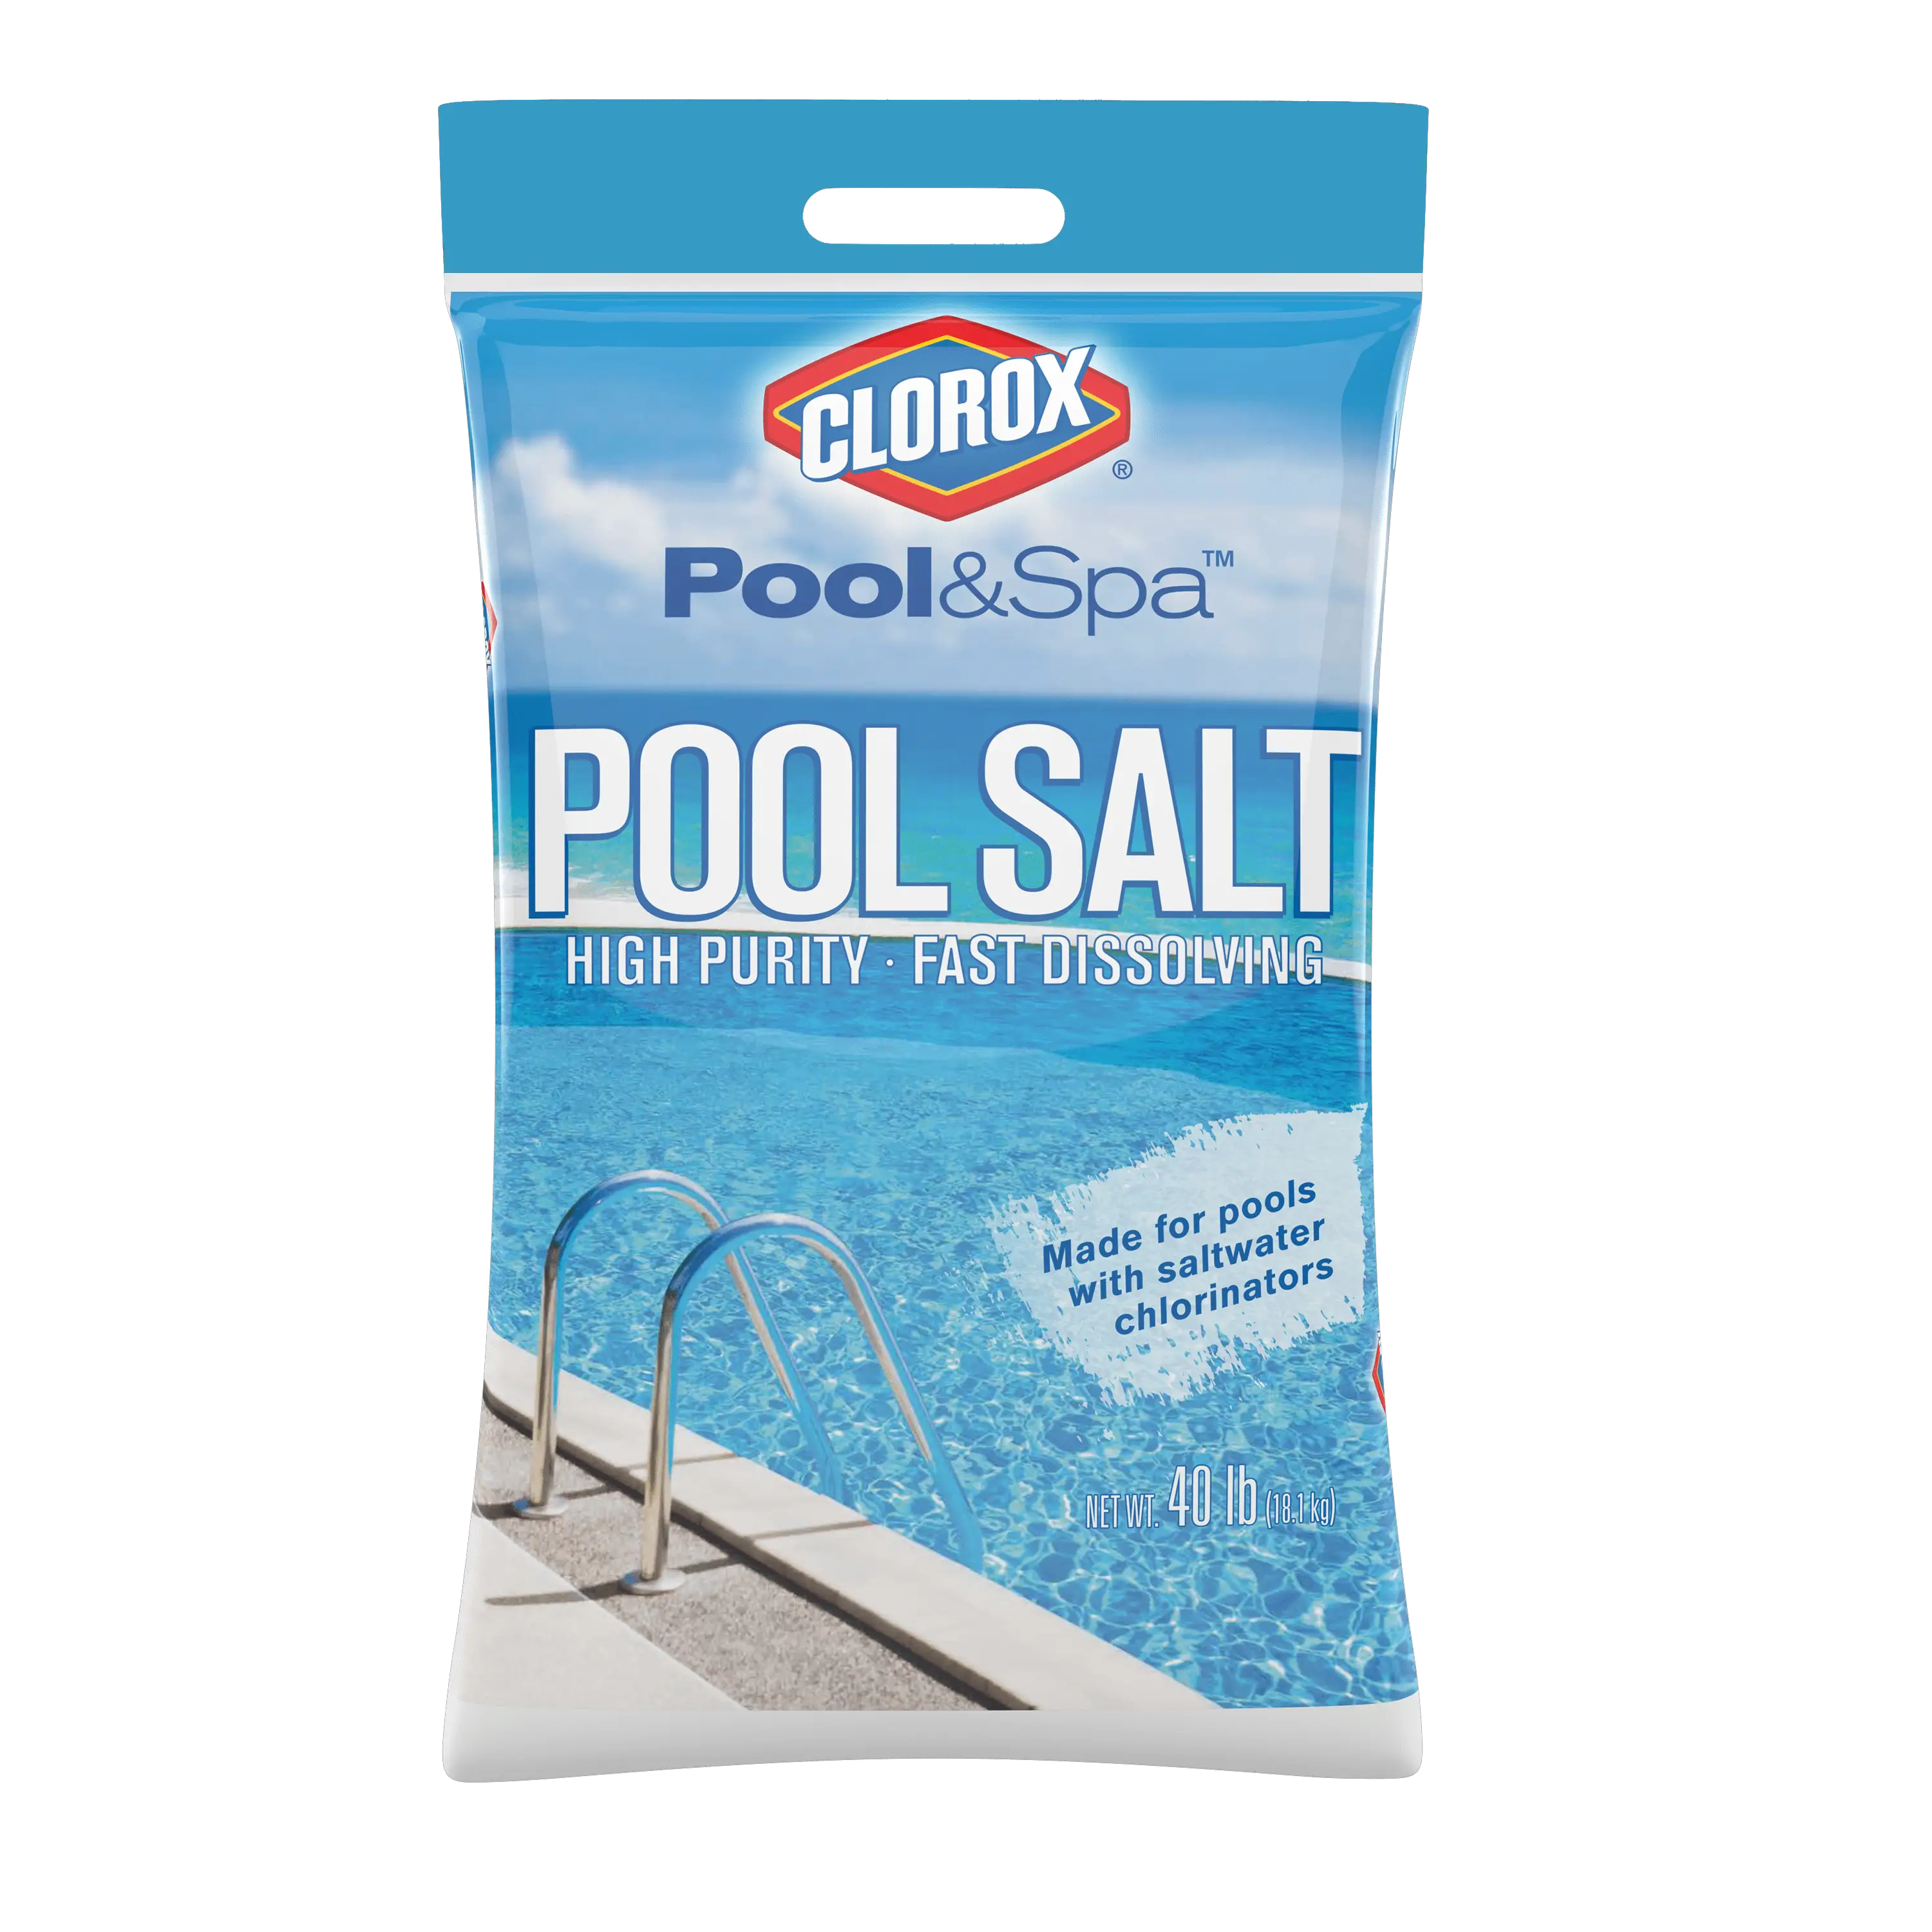 Clorox Pool& Spa Pool Salt for Saltwater Swimming Pools